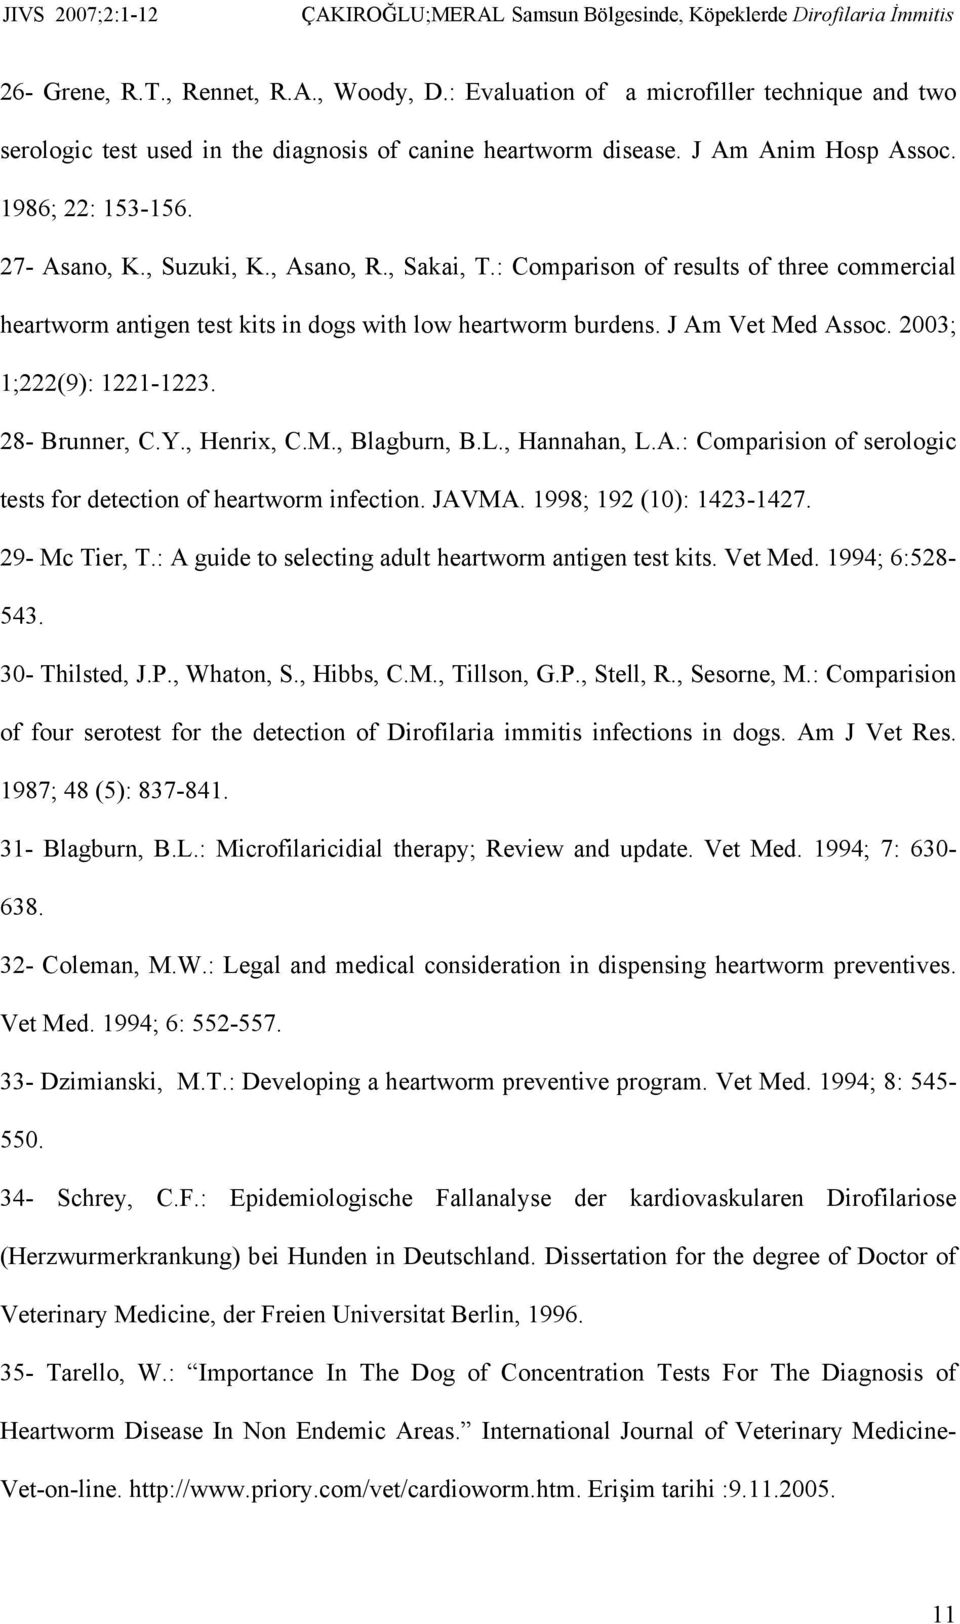 2003; 1;222(9): 1221-1223. 28- Brunner, C.Y., Henrix, C.M., Blagburn, B.L., Hannahan, L.A.: Comparision of serologic tests for detection of heartworm infection. JAVMA. 1998; 192 (10): 1423-1427.